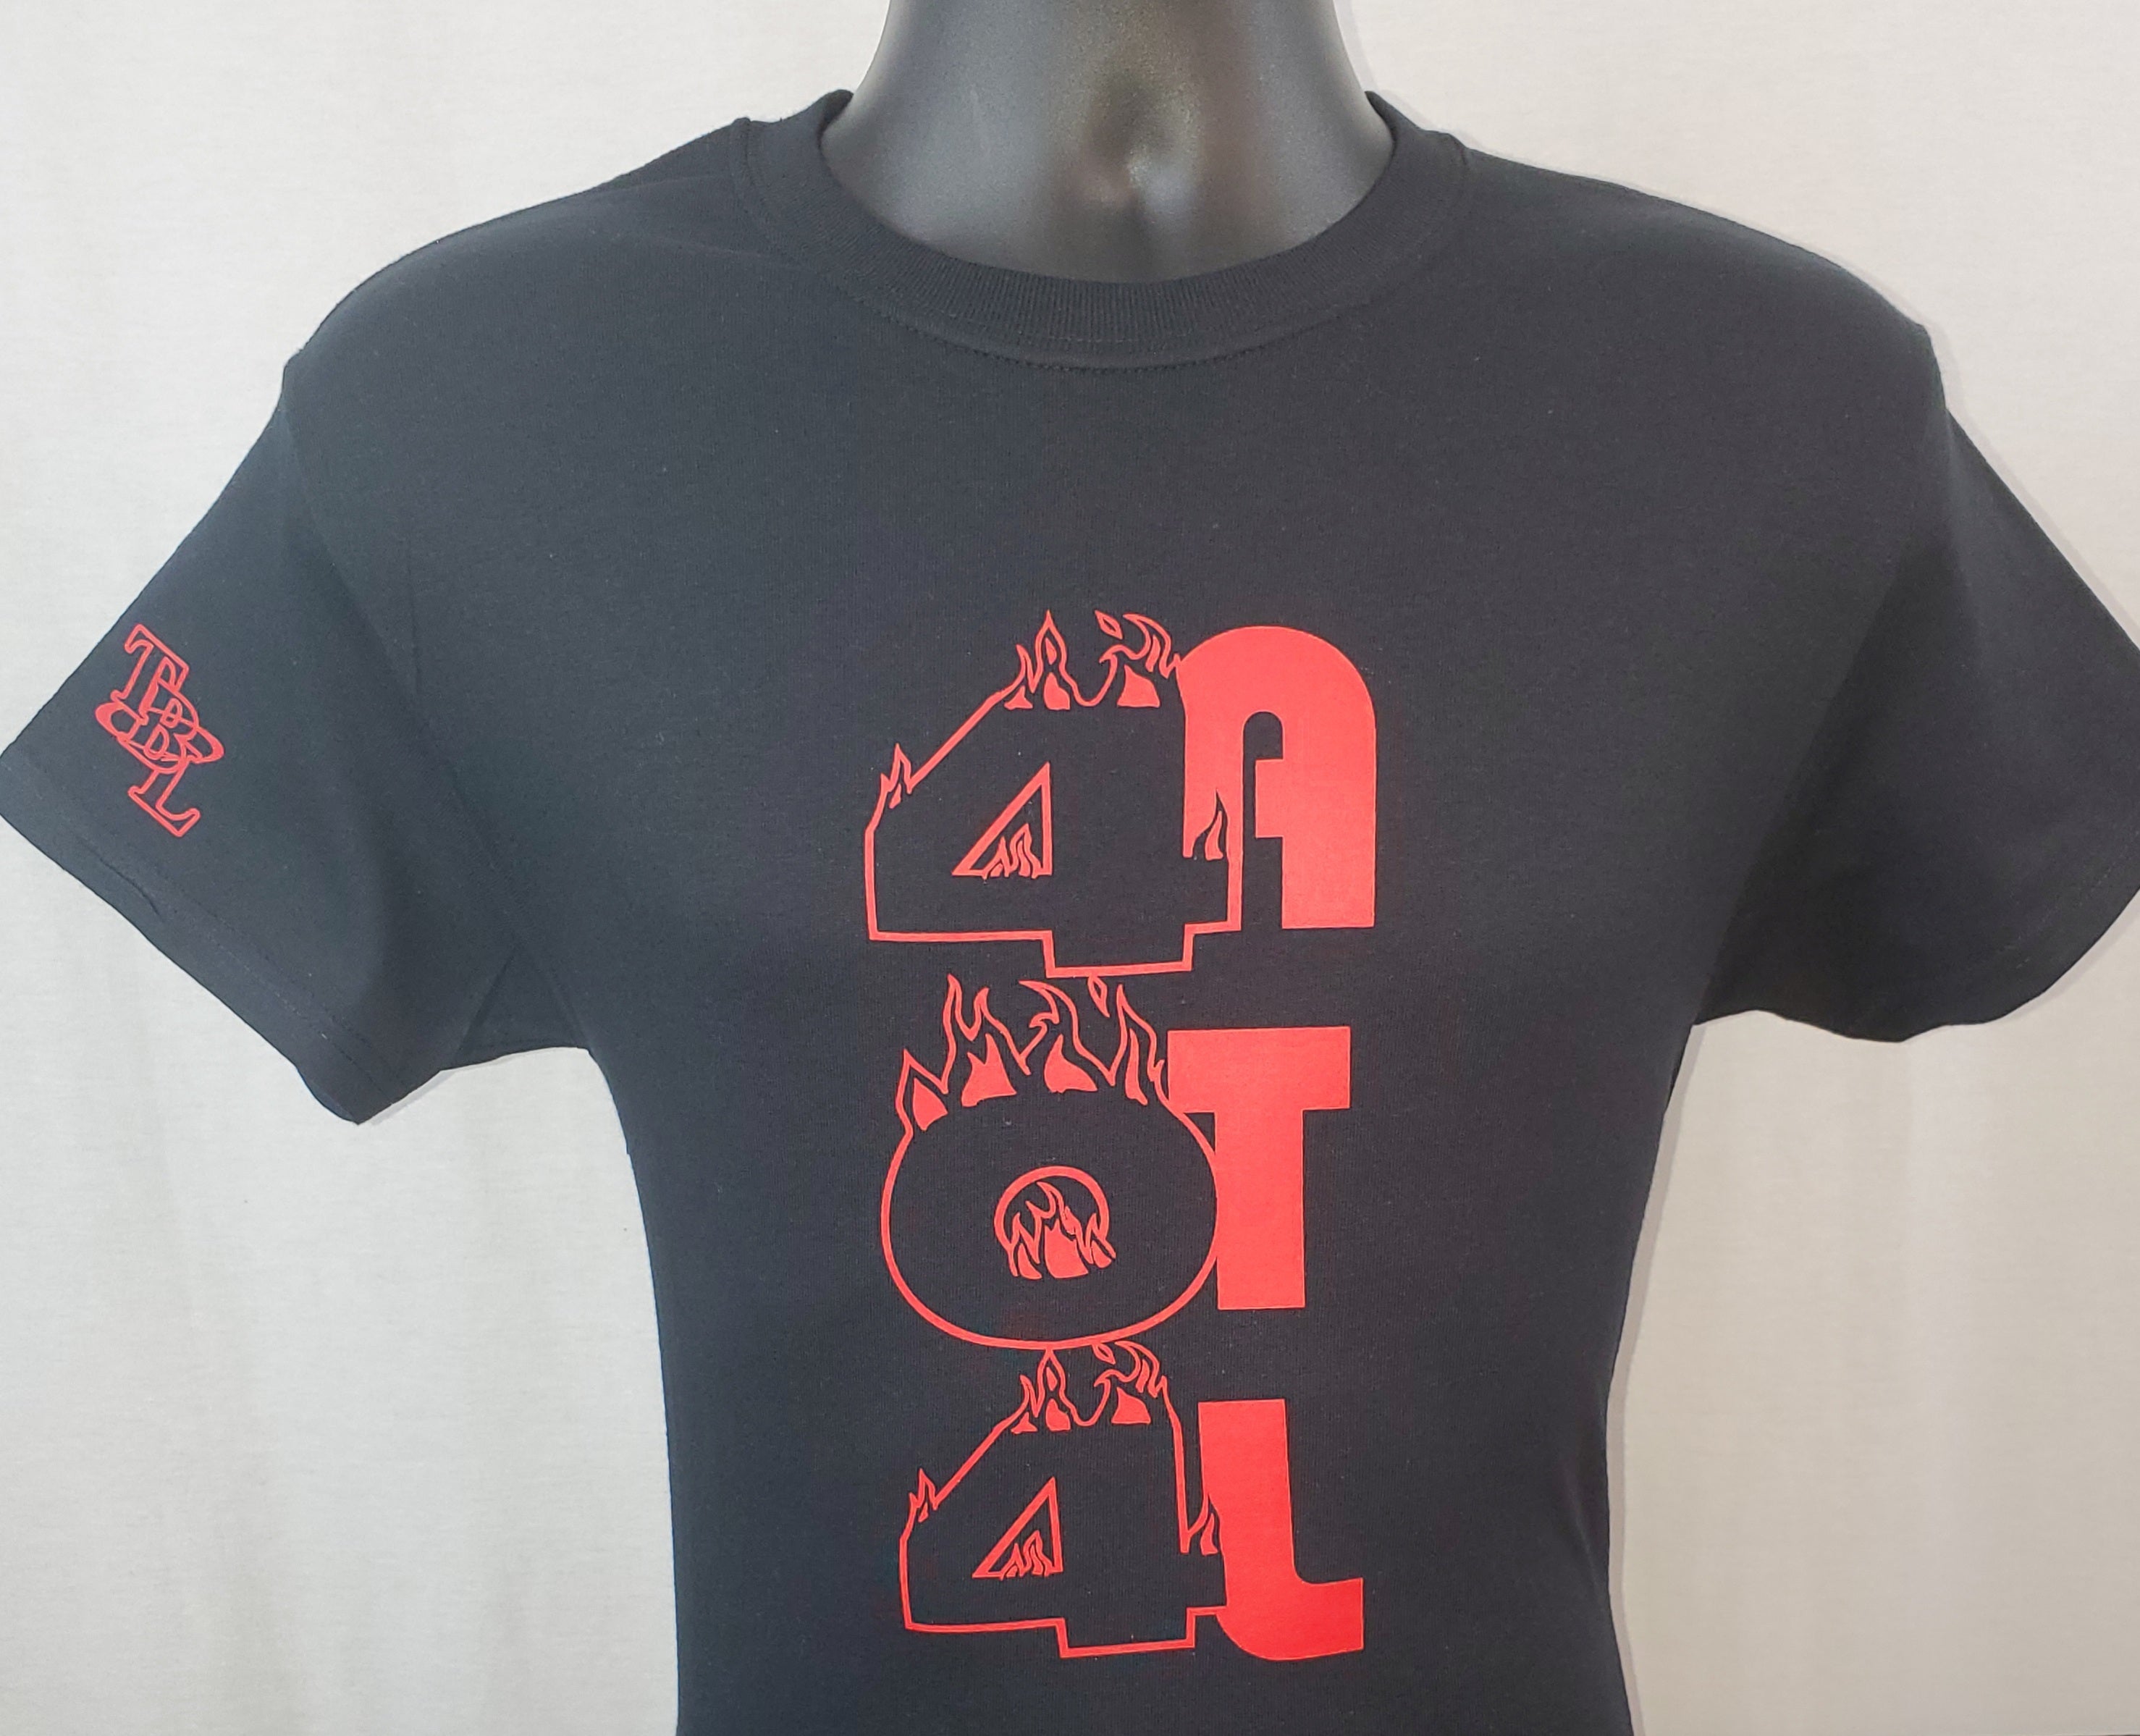 Hot 404 ATL1 Black T-shirt